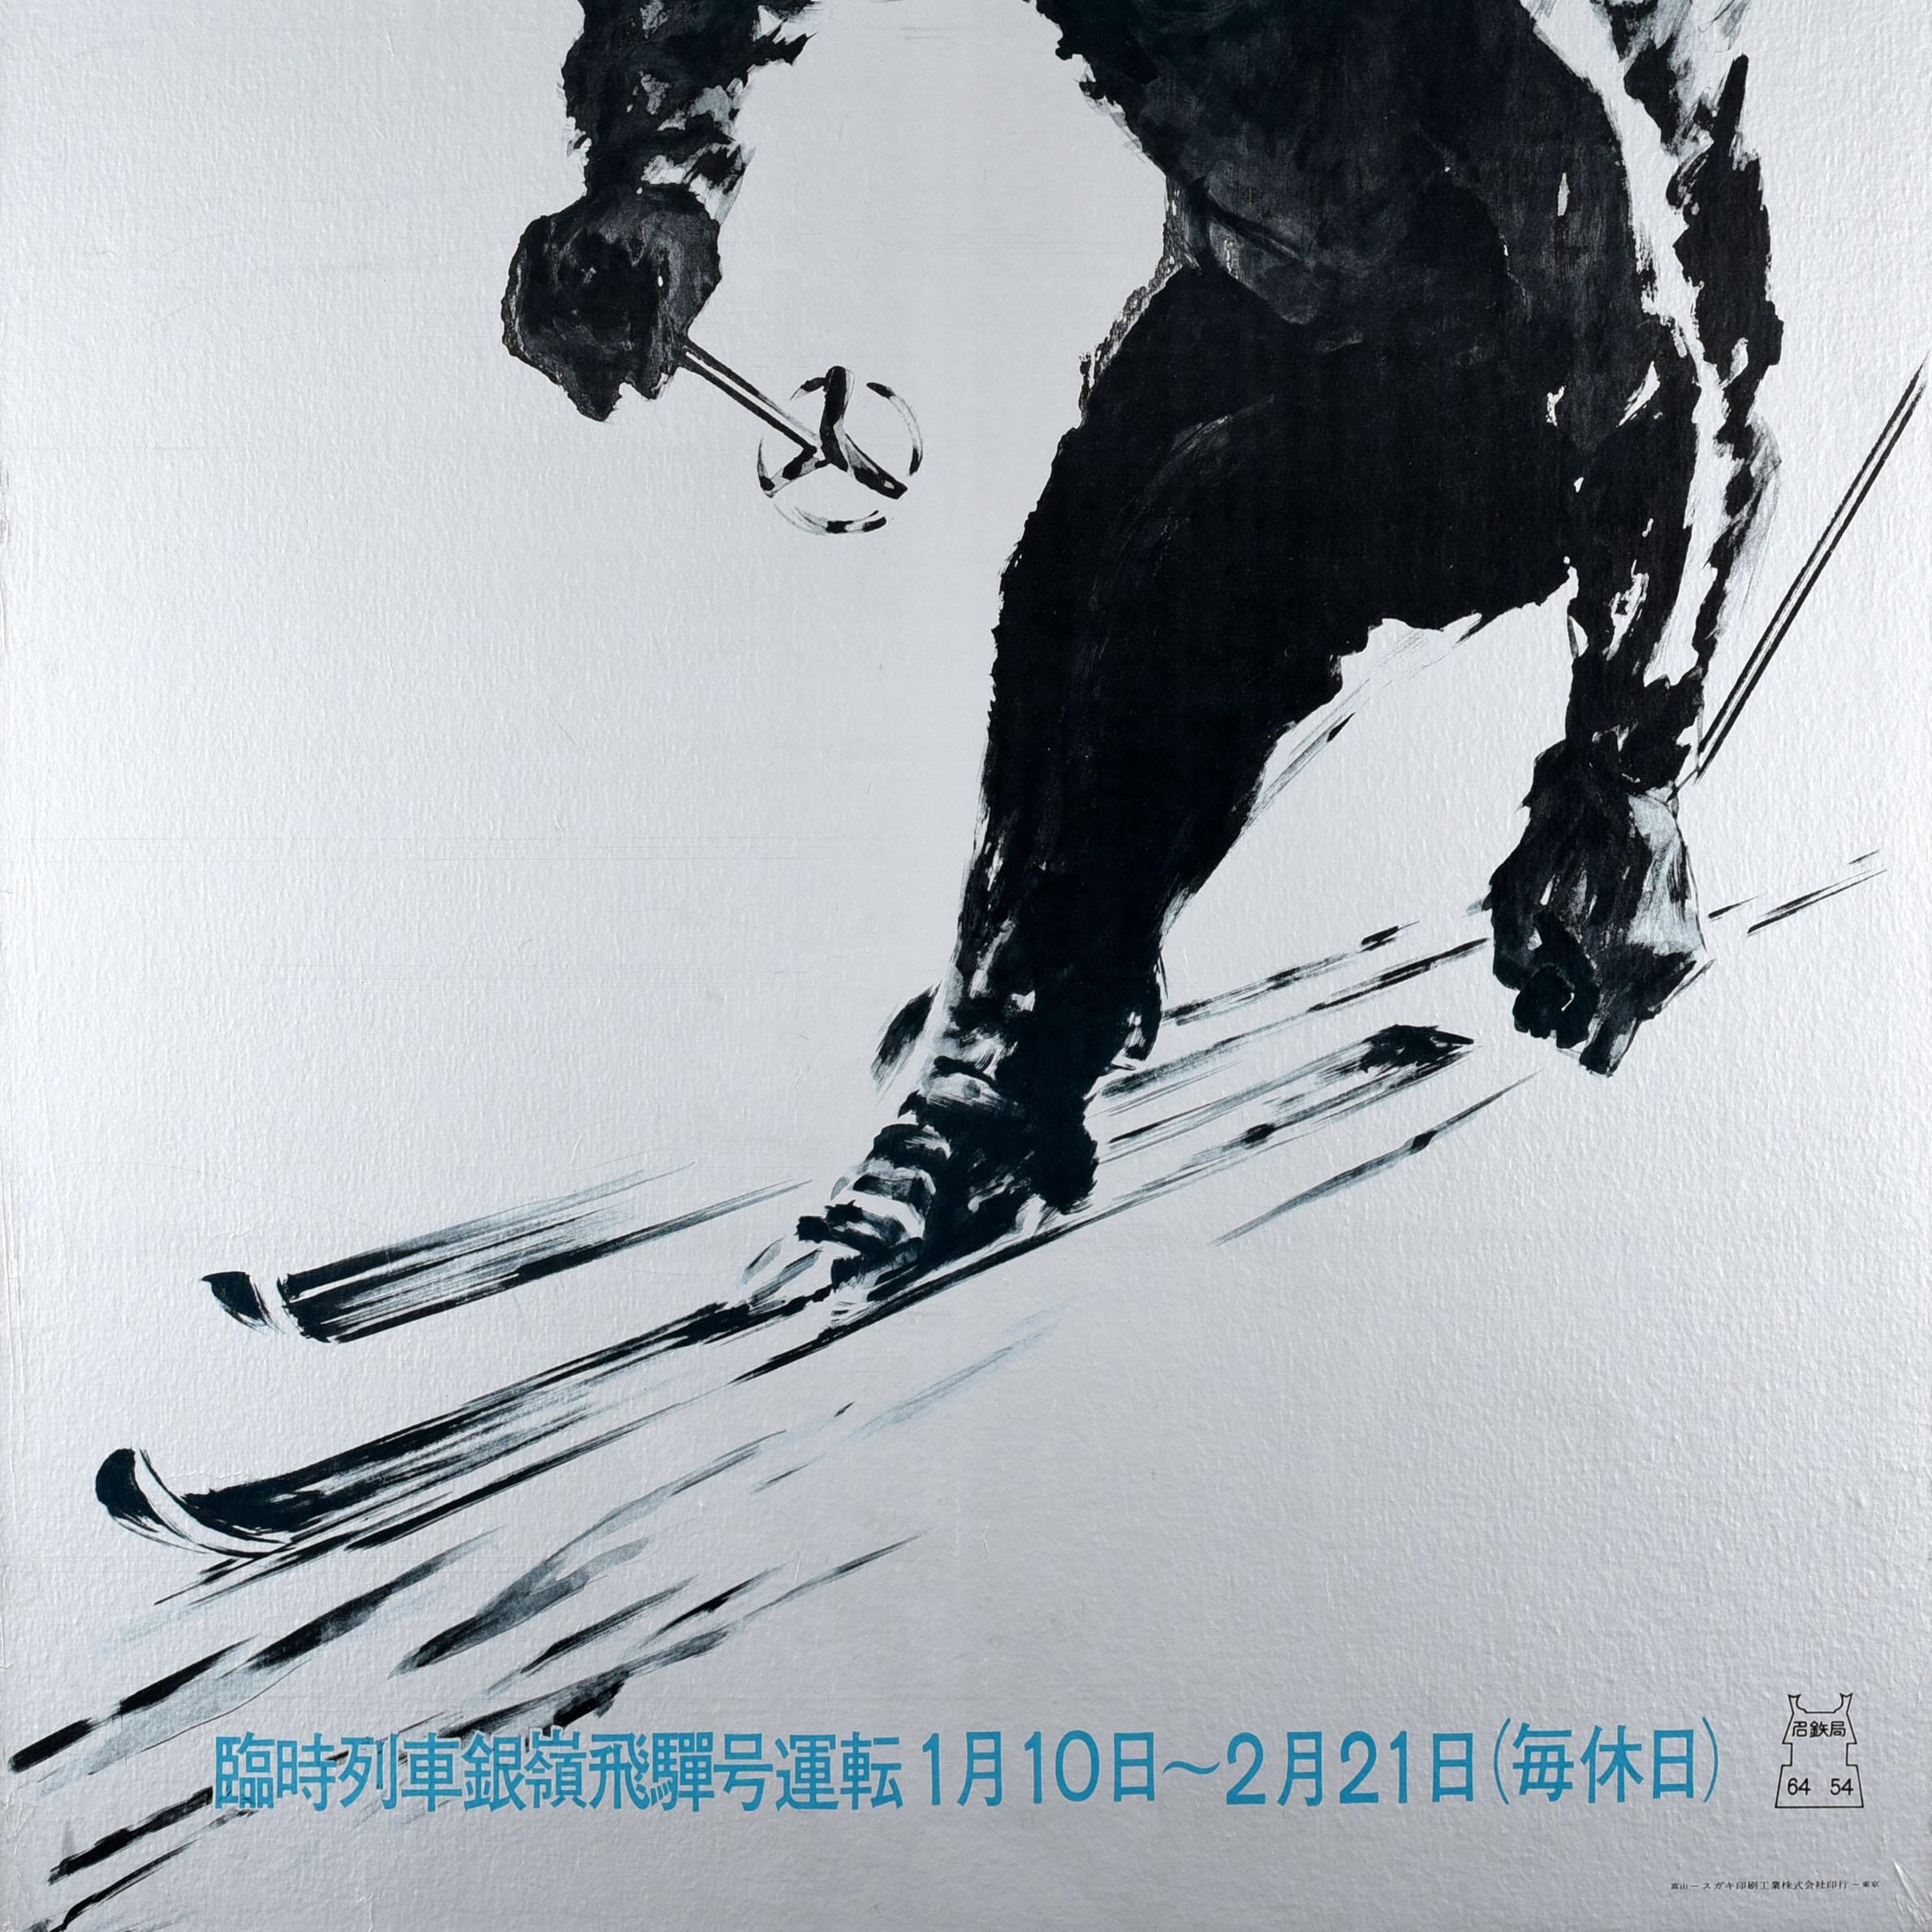 Original Vintage Winter Sport Travel Poster Ski Japan Harayama Hida Takayama - Gray Print by Unknown